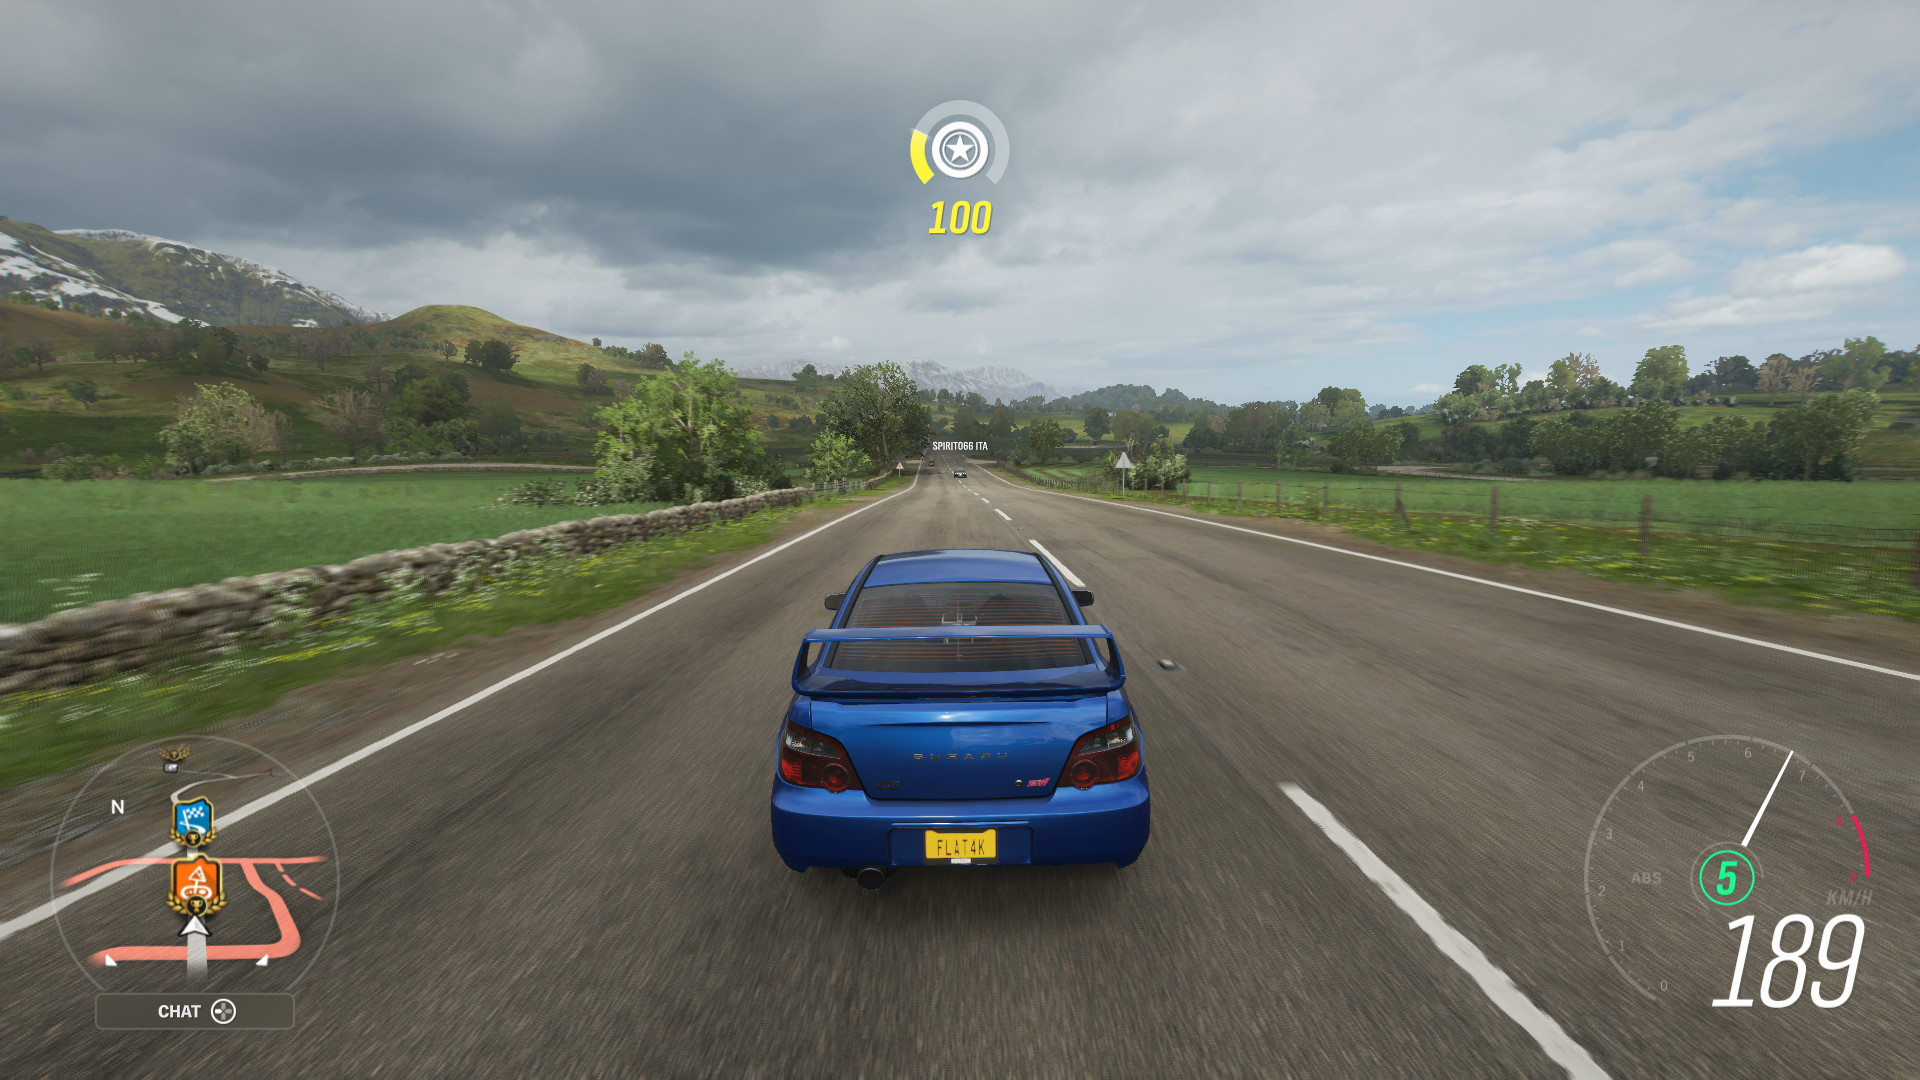 Xbox Series S screenshot of Forza Horizon 4 with a Subaru driving through the countryside